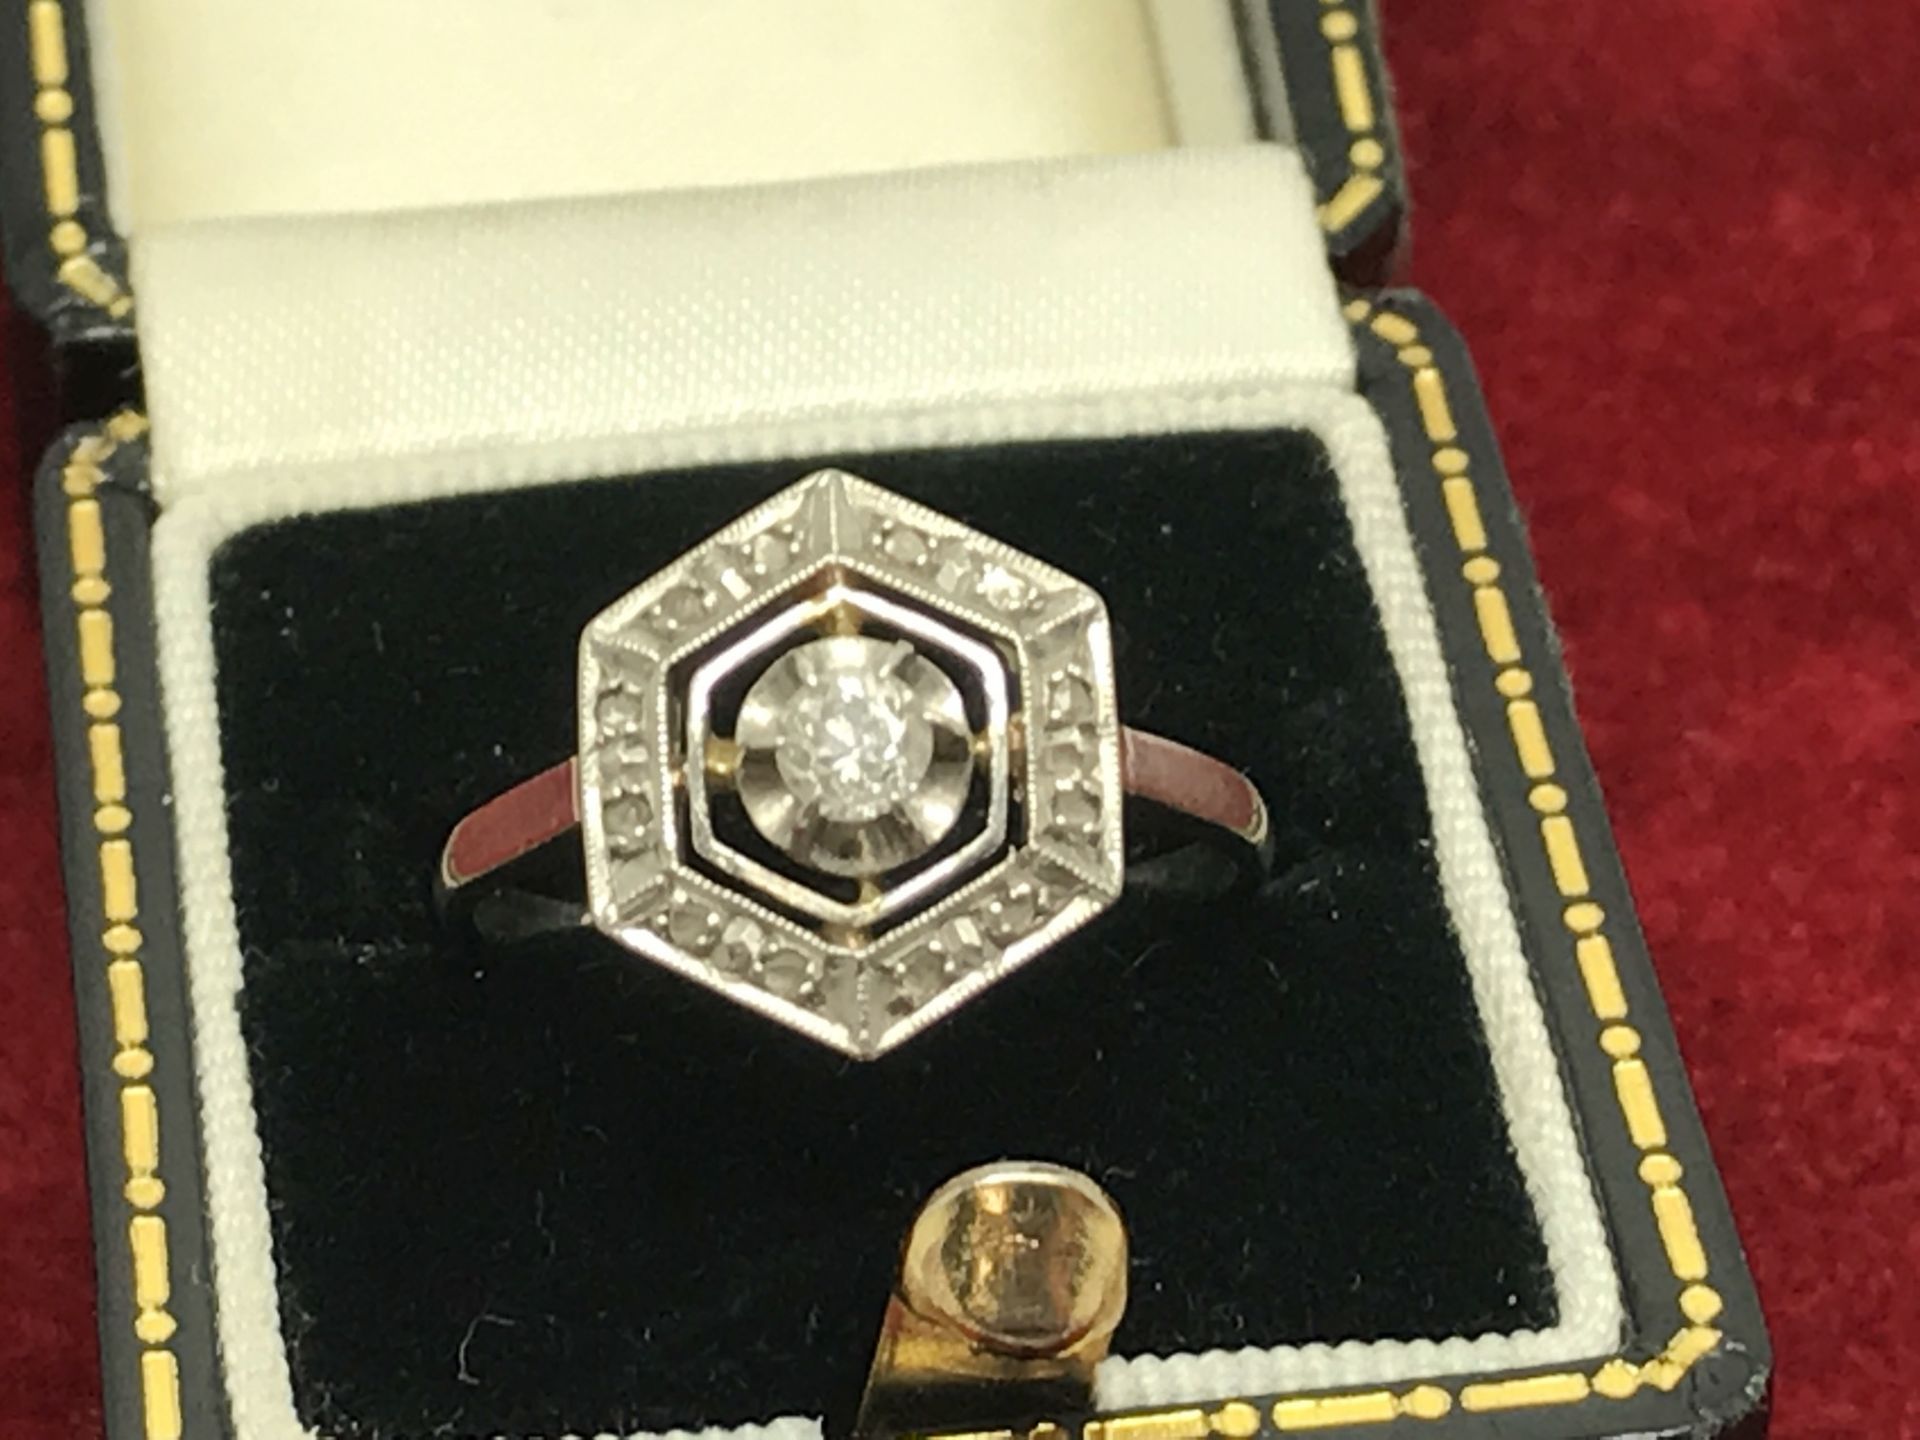 1920's DIAMOND RING SET IN WHITE METAL TESTED AS PLATINUM